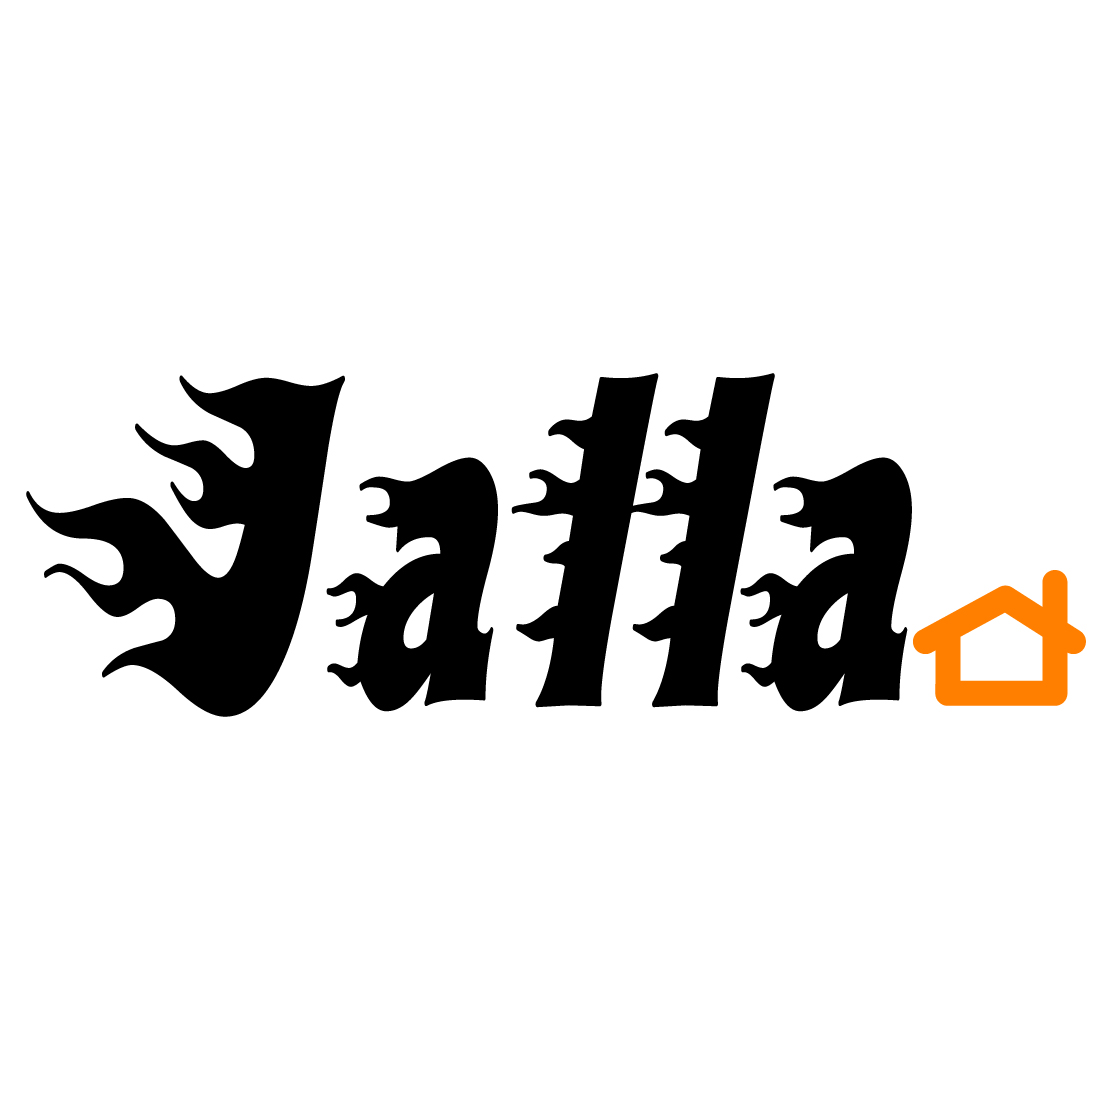 Jalla House - TShirt Print Design preview image.